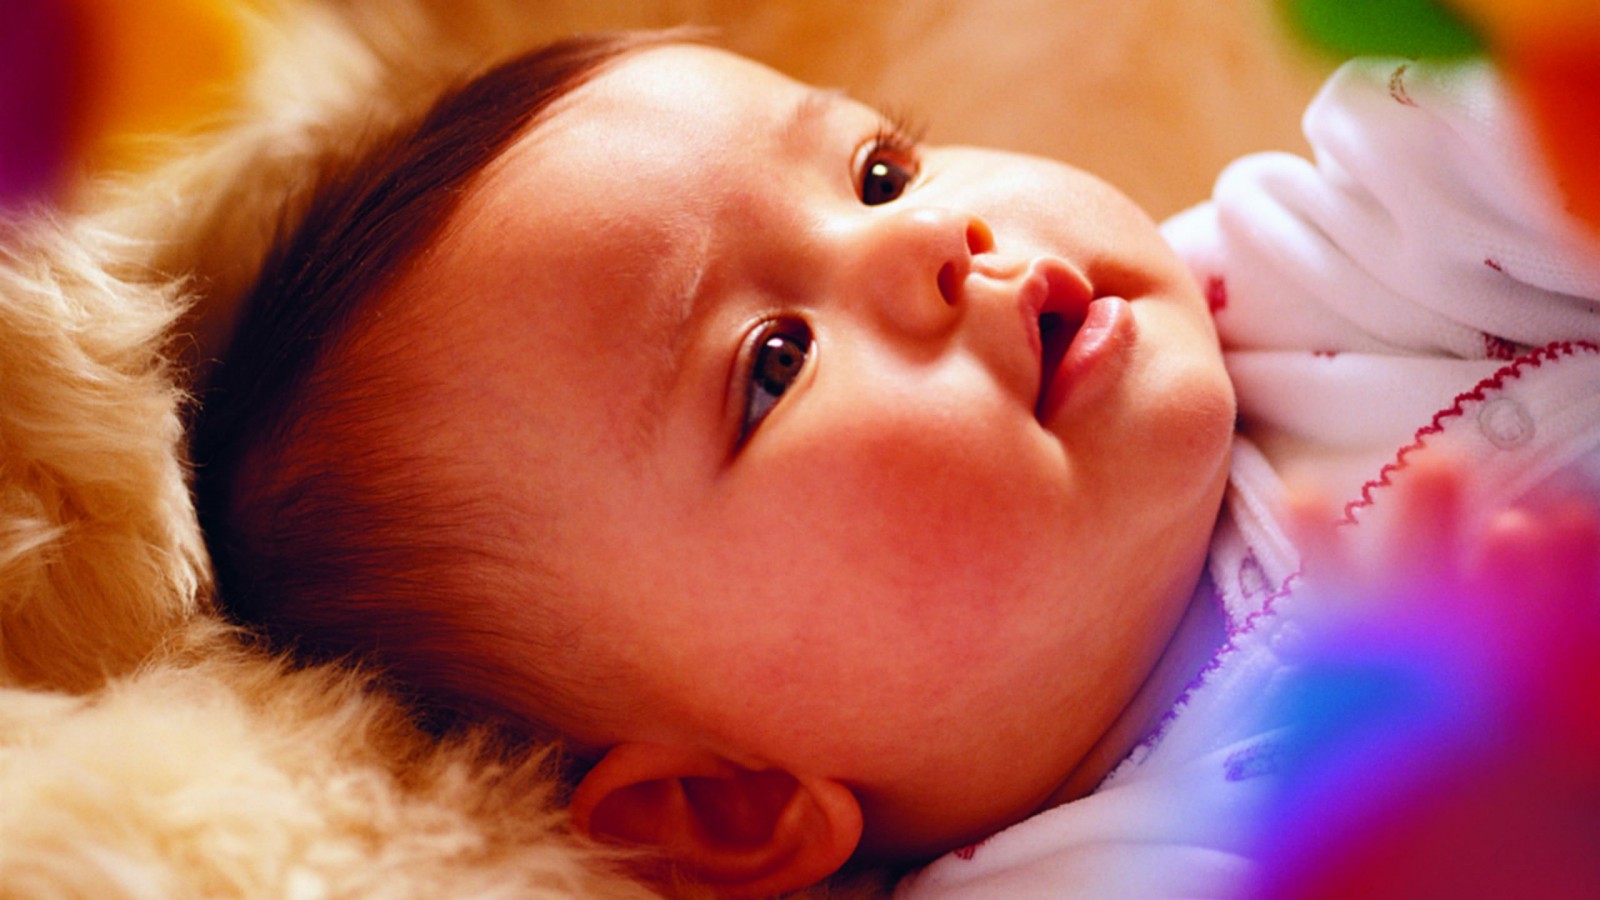 Cute Baby Wallpaper HD Pictures Pixel Popular